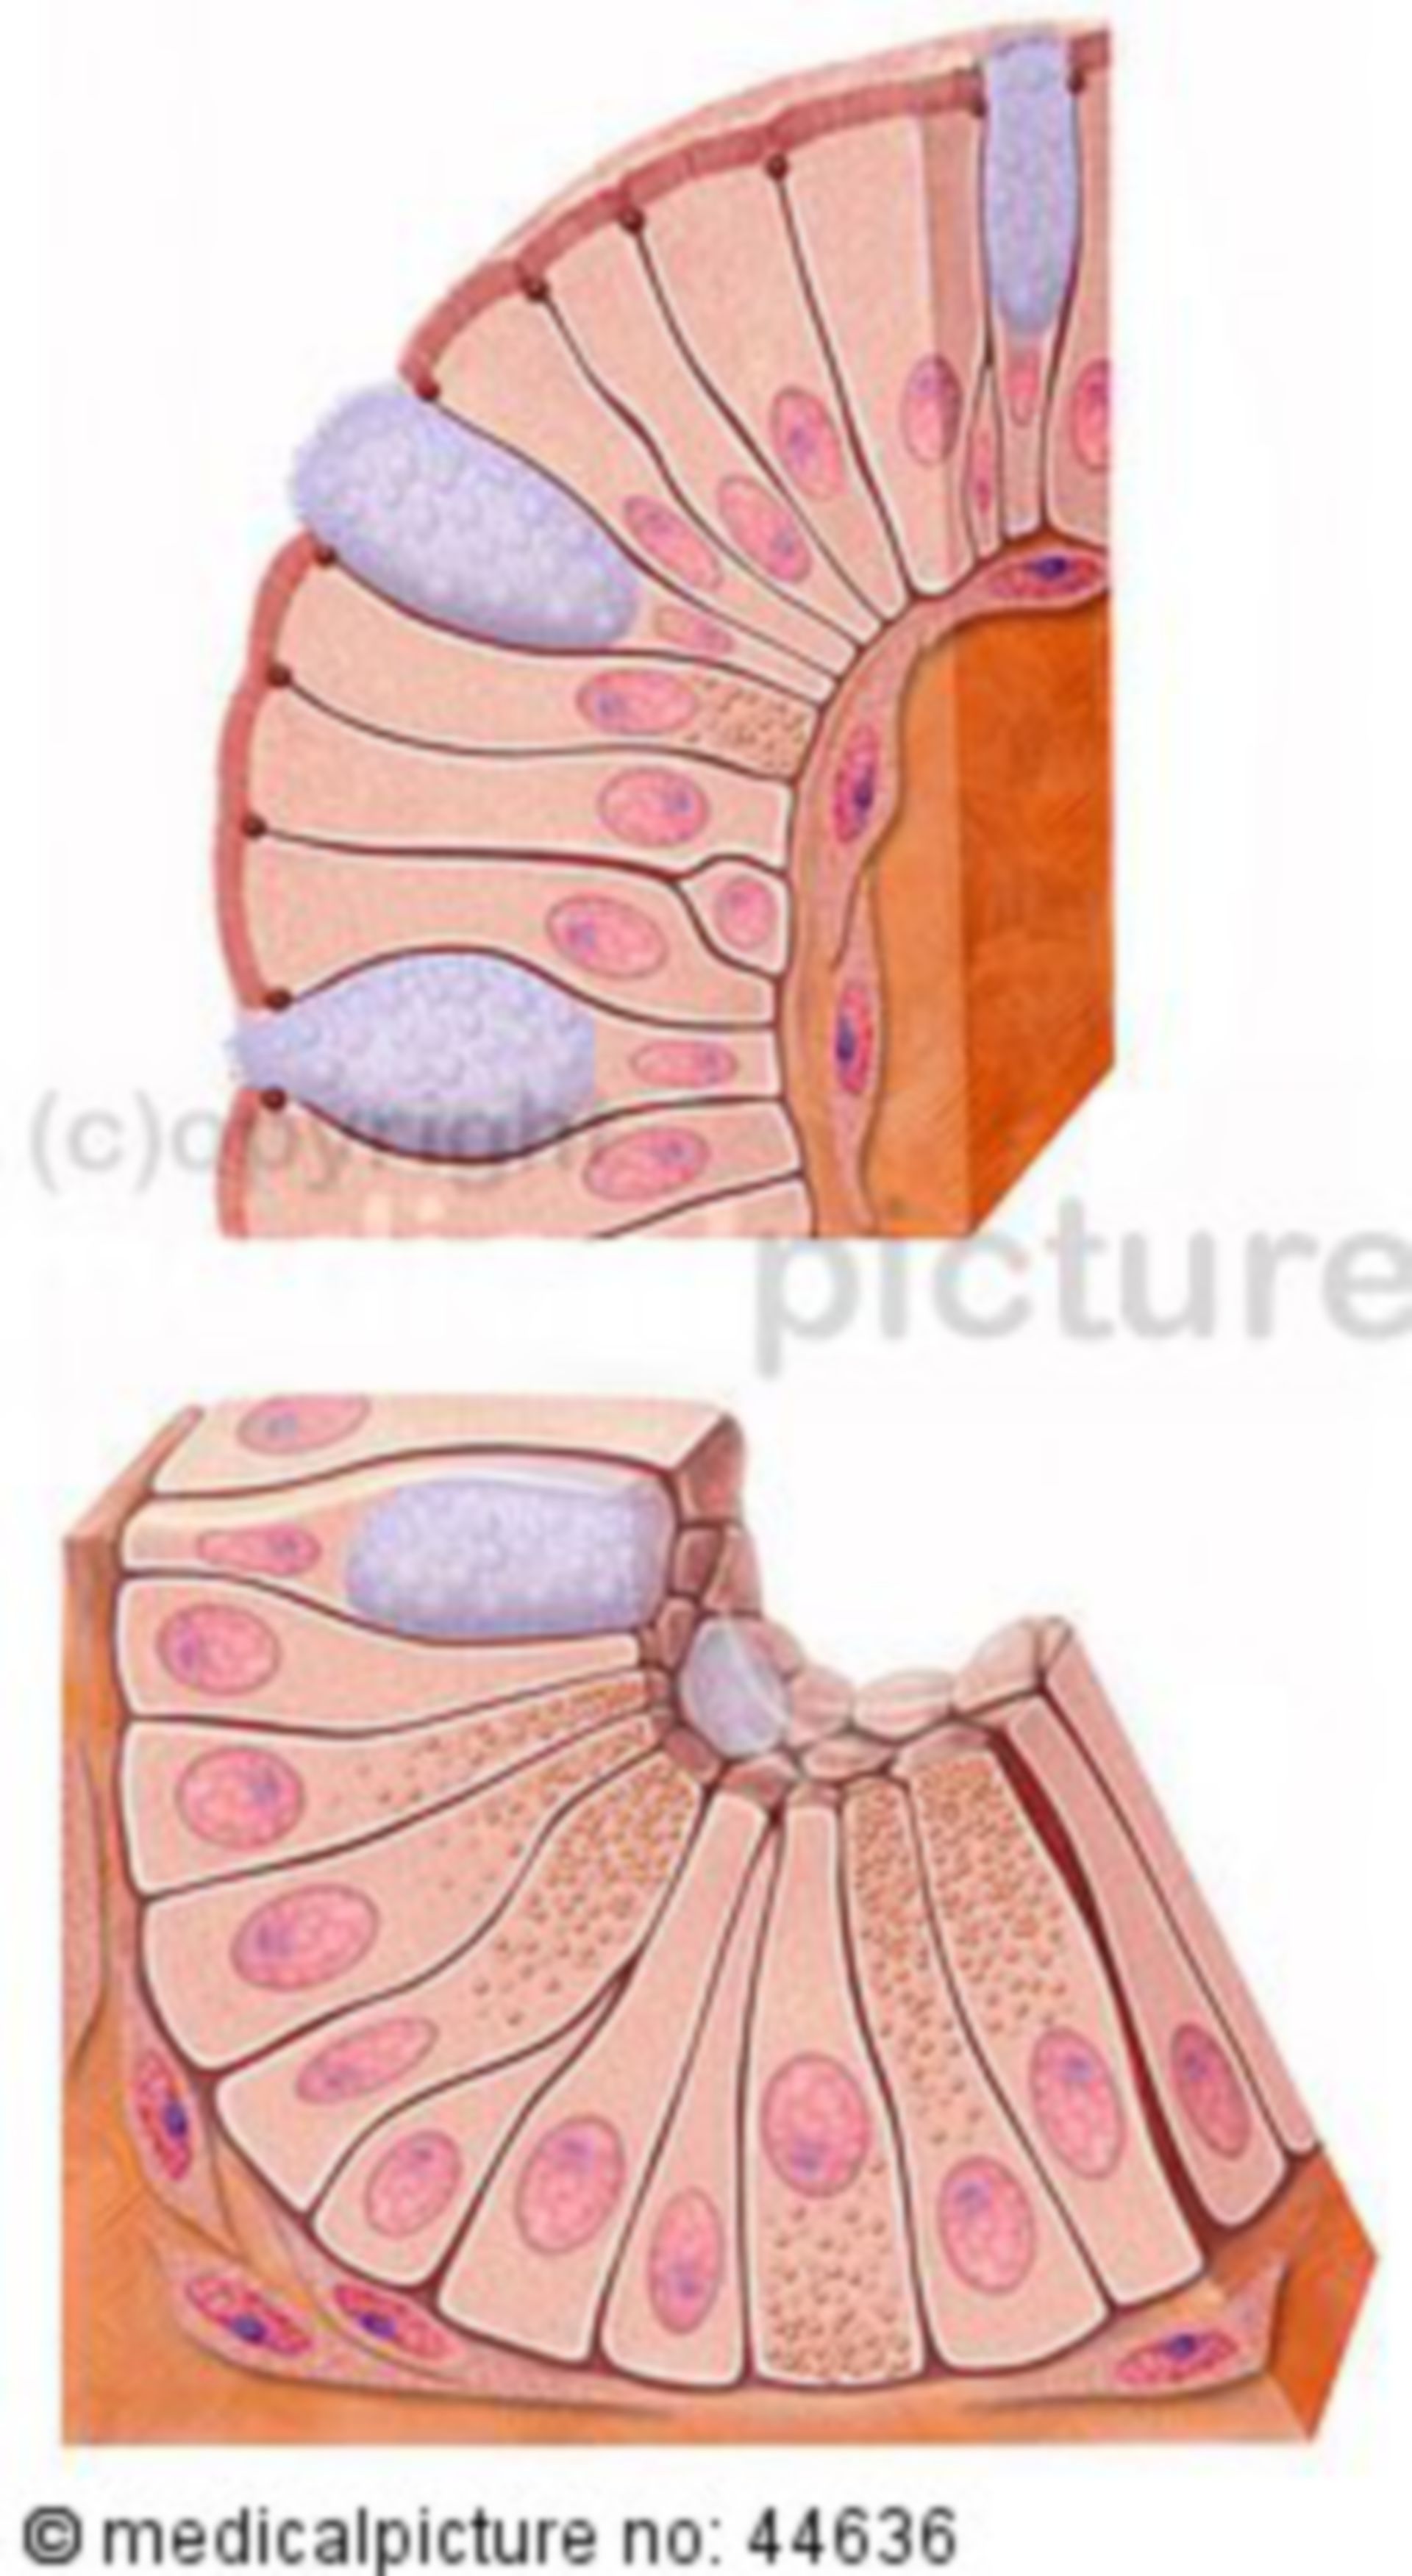 Cells of the small intestine - jejunum